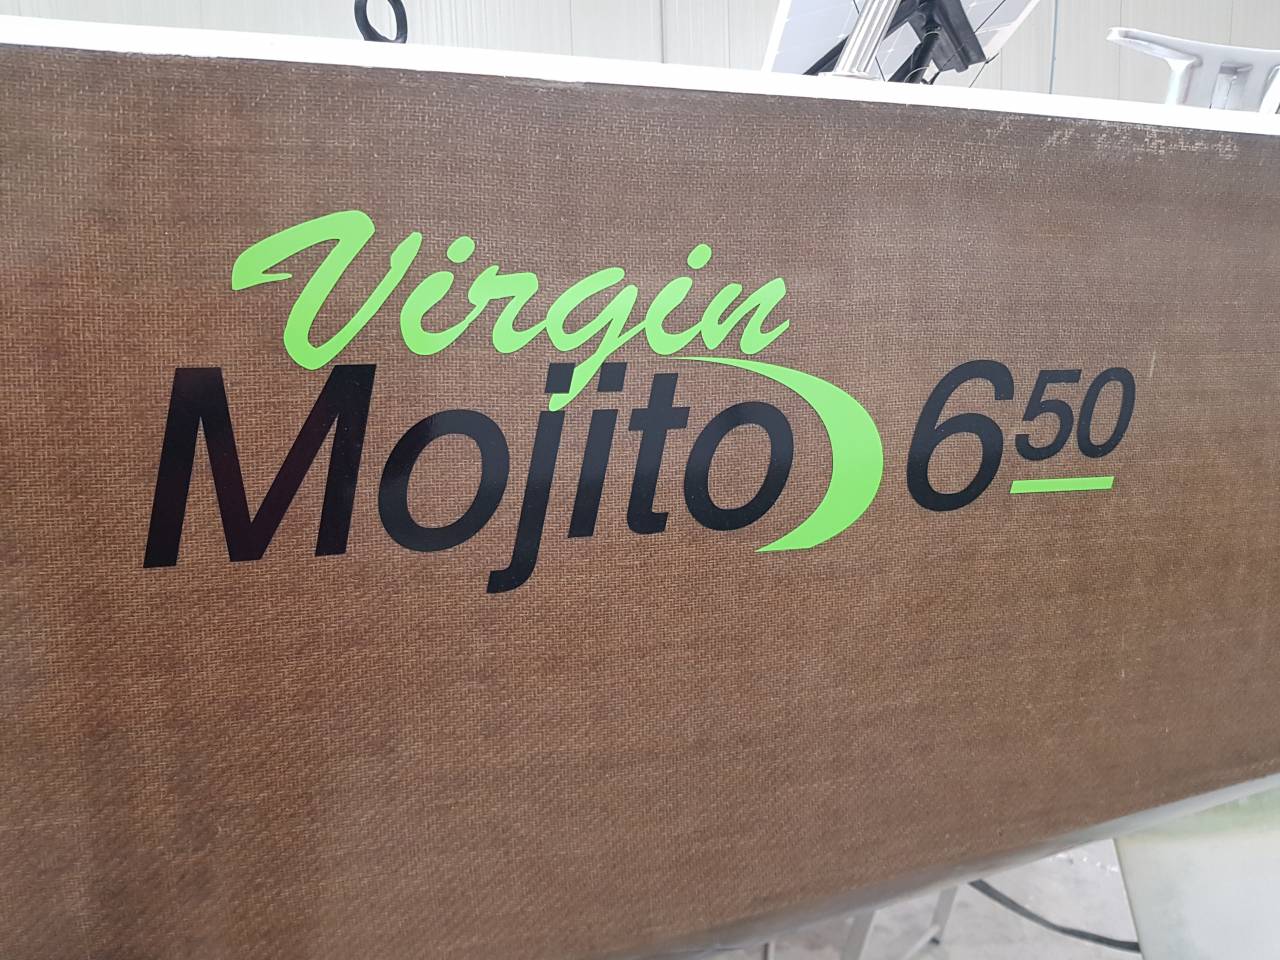 Vue du logo "Virgin Mojito 650" et fibre de lin de la coque